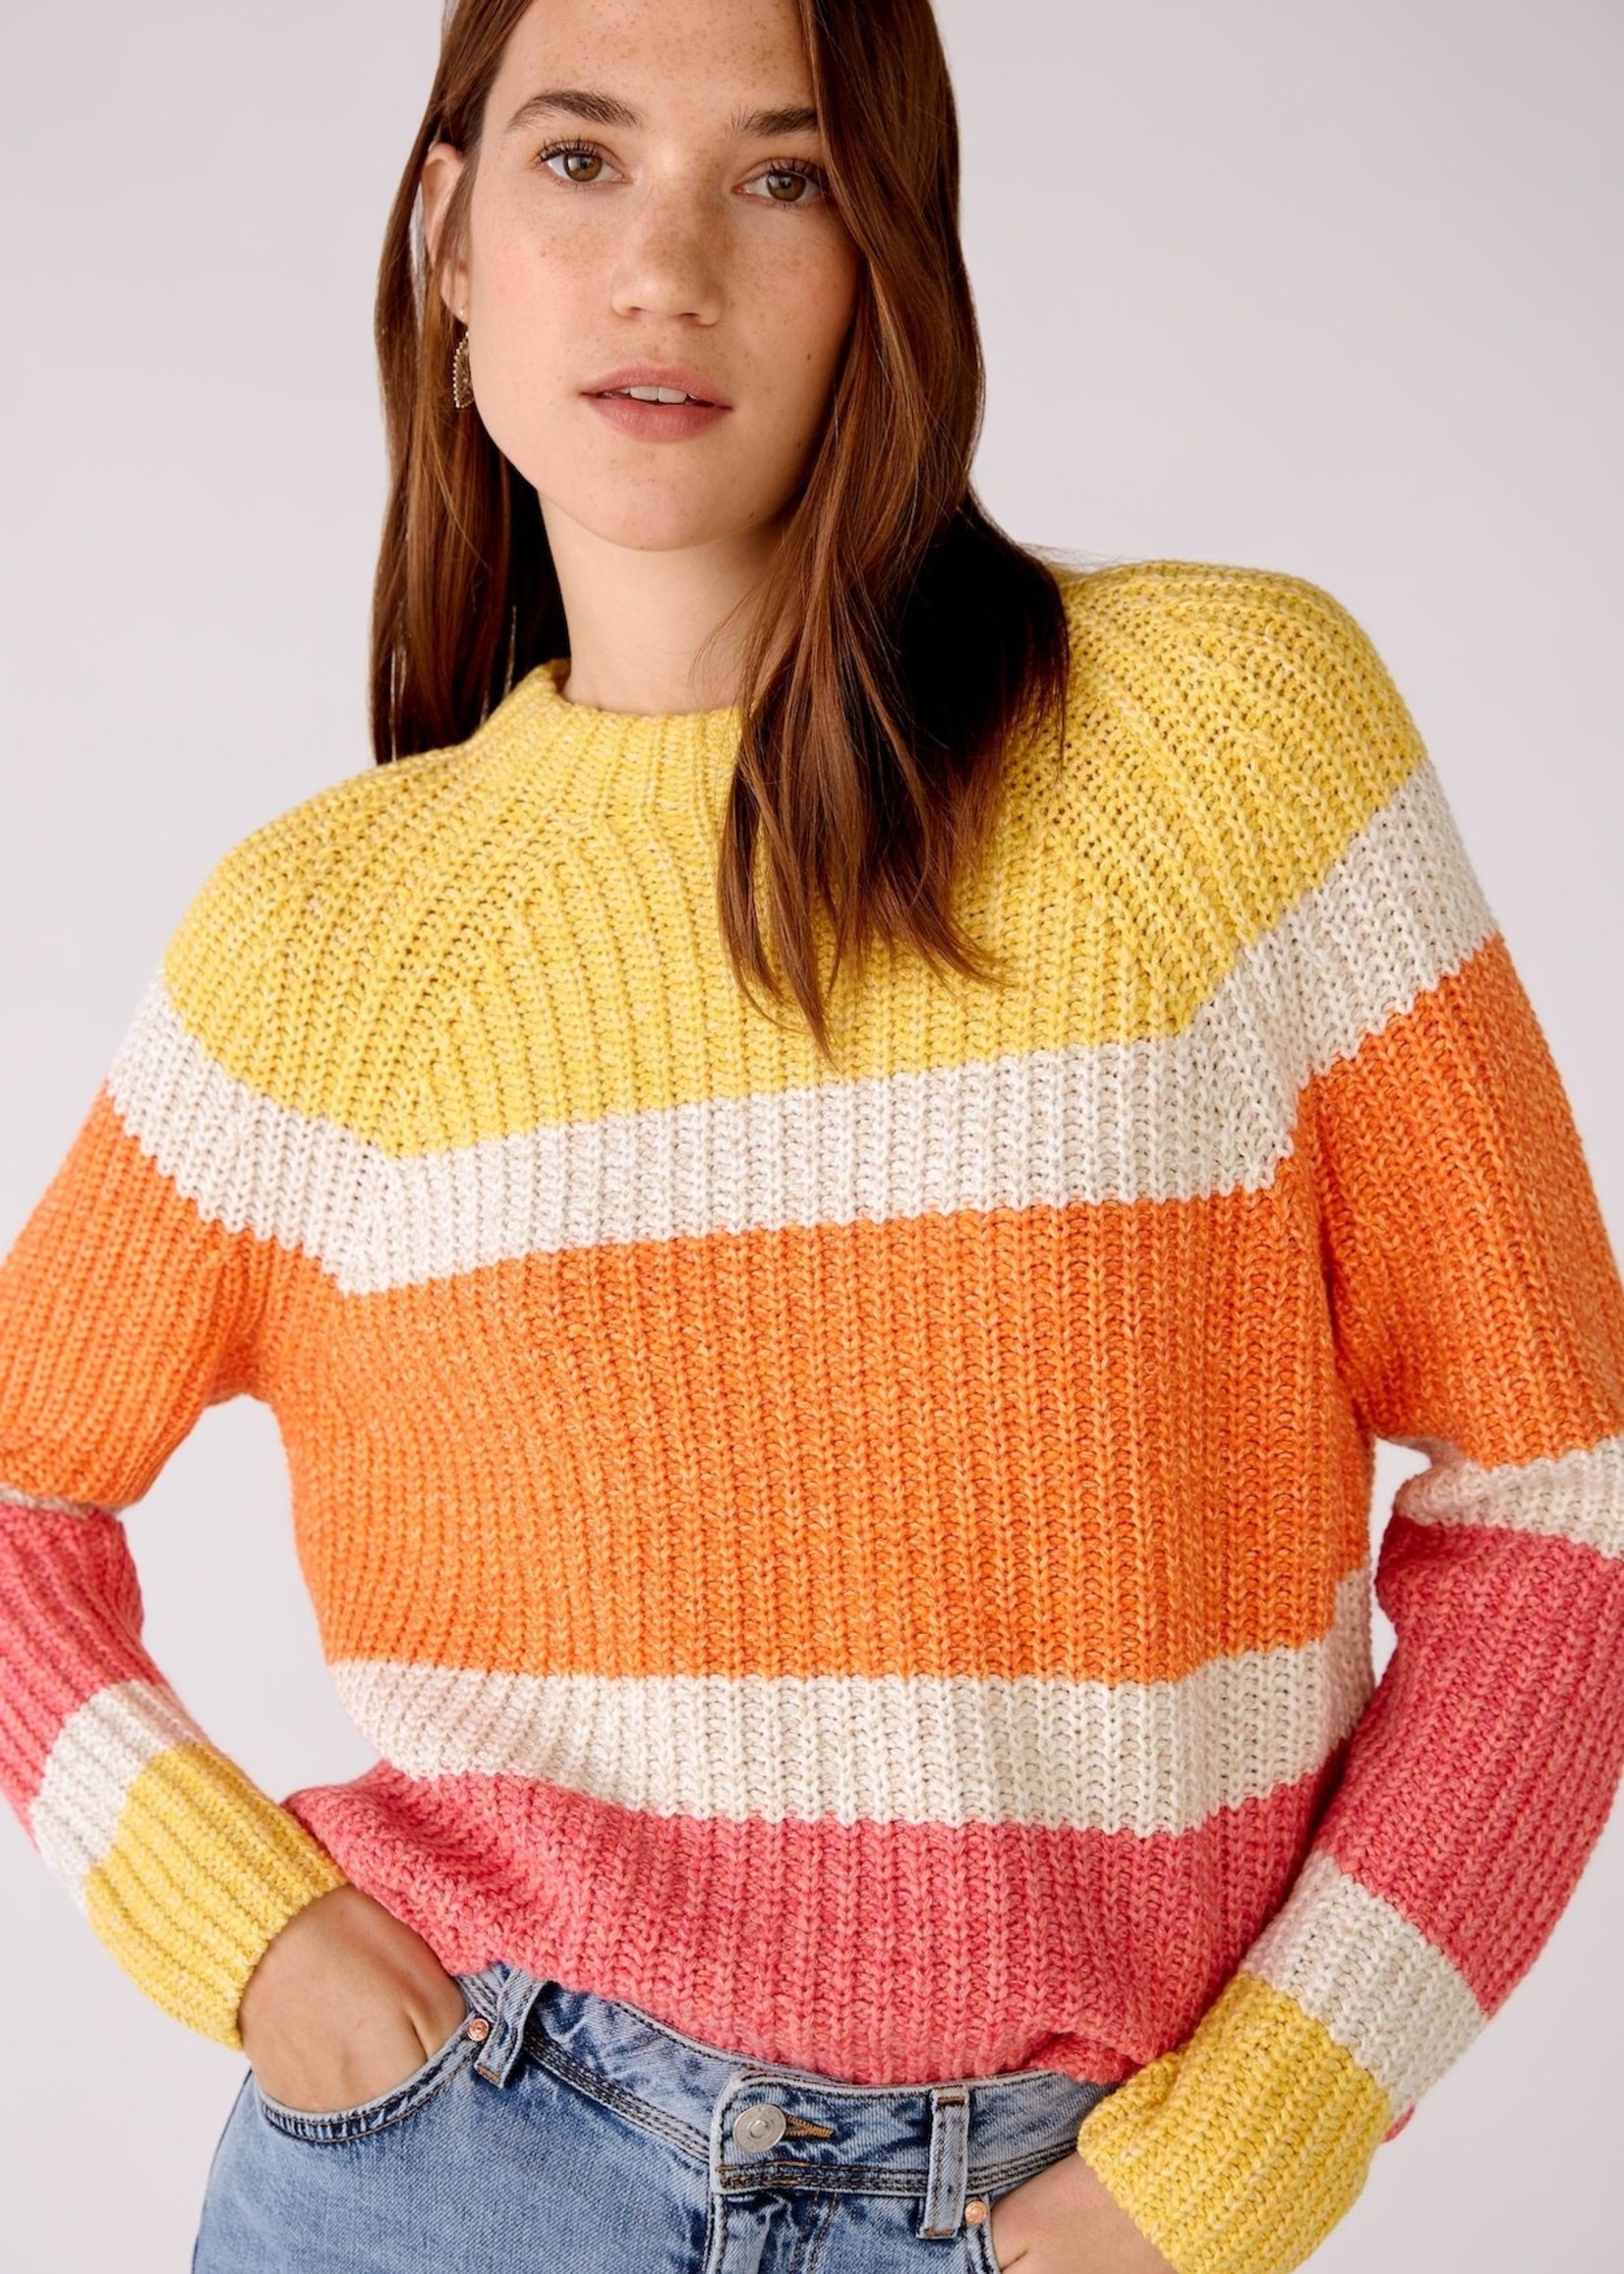 Oui Oui knit pullover 78201